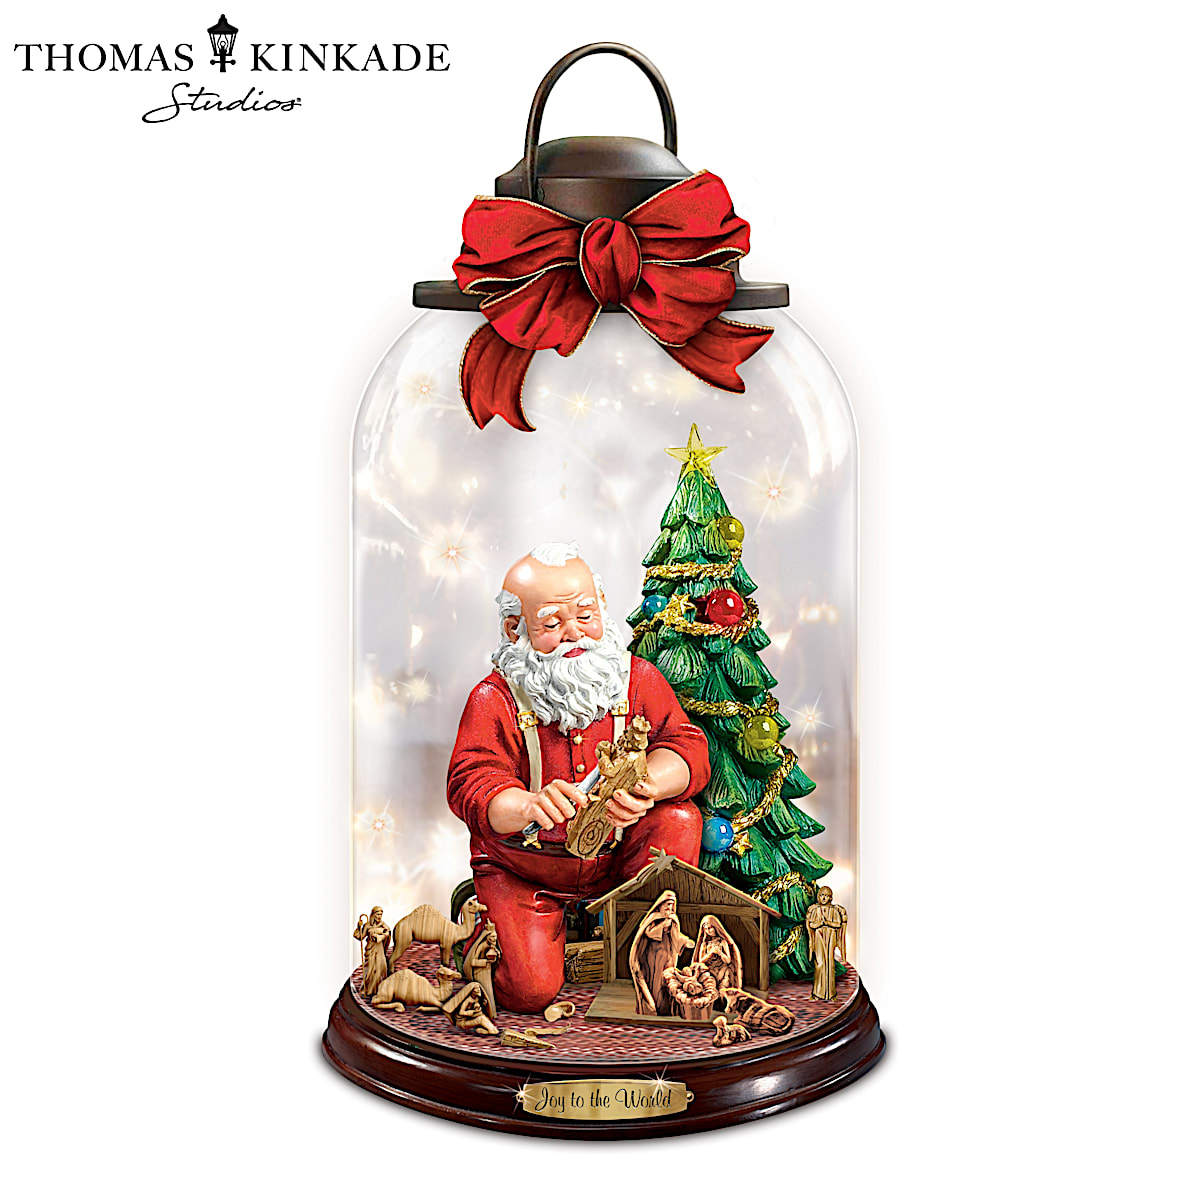 https://media.bradfordexchange.com/images/d_bxus_default.png/w_1200,h_1200,q_auto,f_auto,dpr_1,e_sharpen:100/bradford-exchange/0134368001/Thomas-Kinkade-Christmas-Lantern-With-Lights-And-Narration